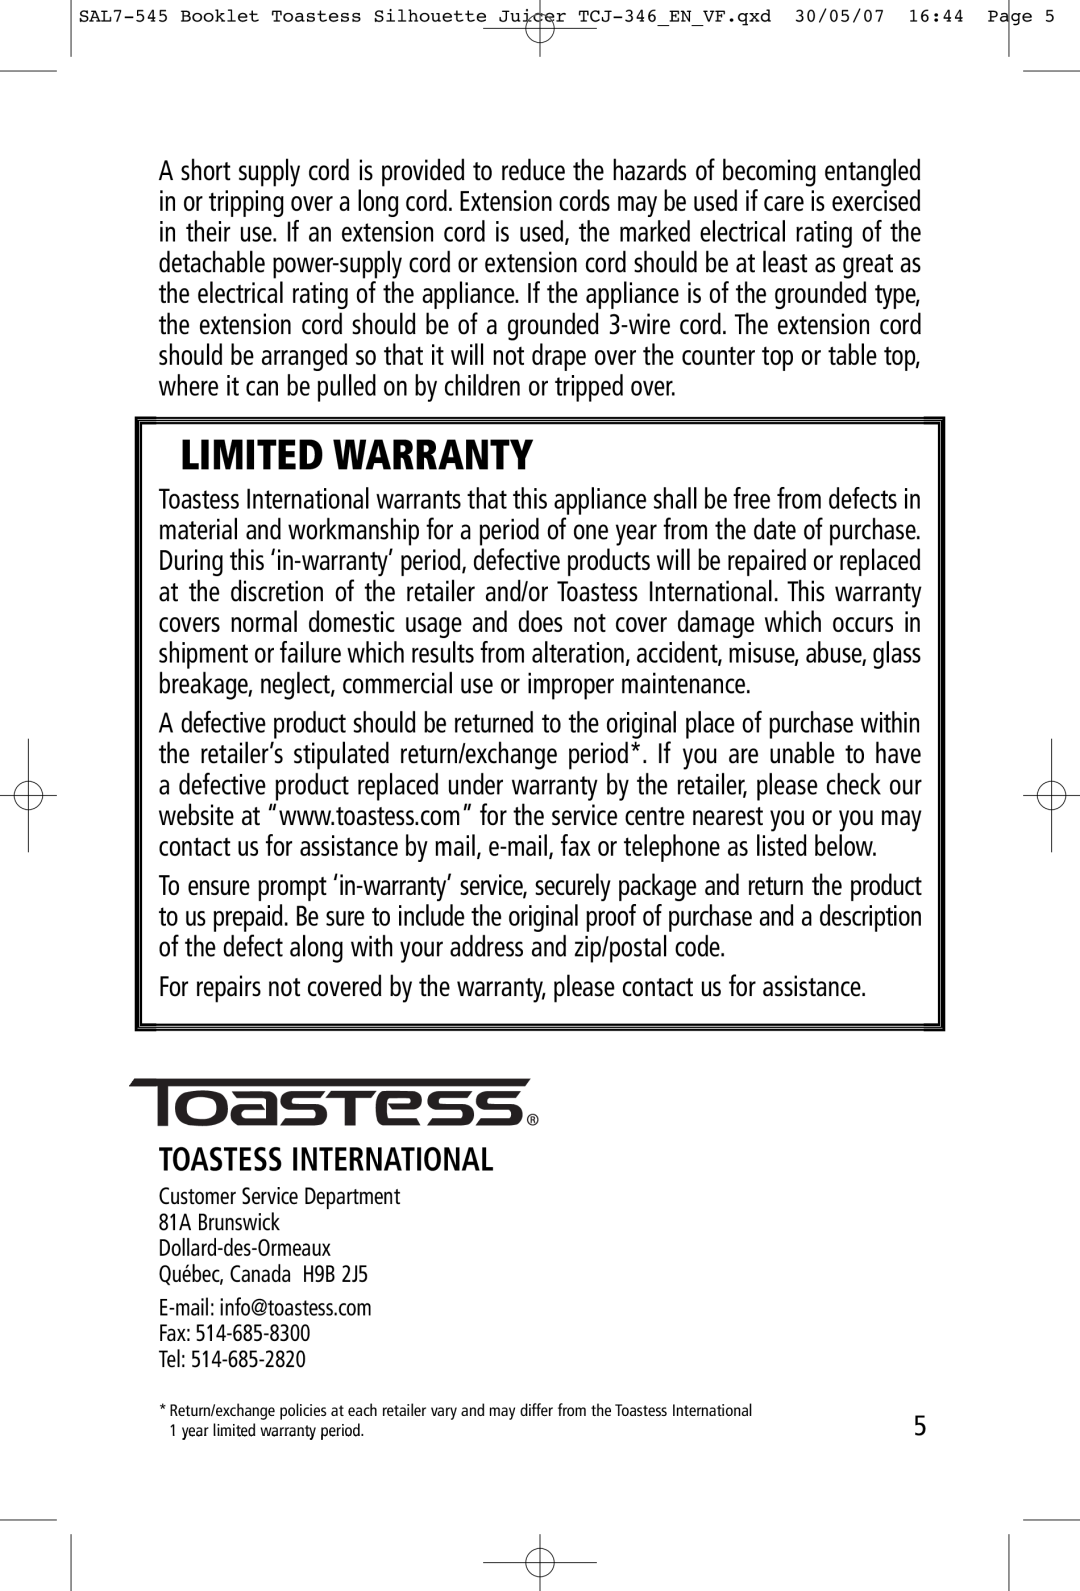 Toastess TCJ346 manual Toastess International, Limited Warranty 